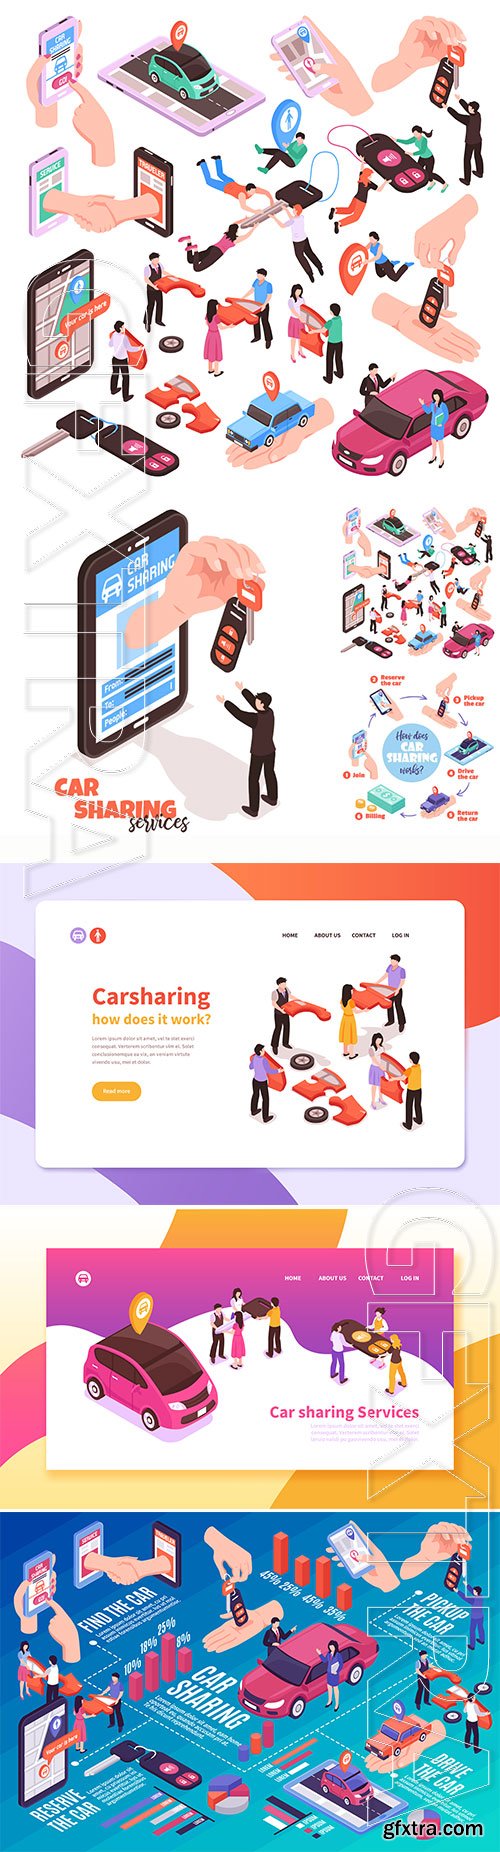 Isometric set of car sharing service elements vector illustration